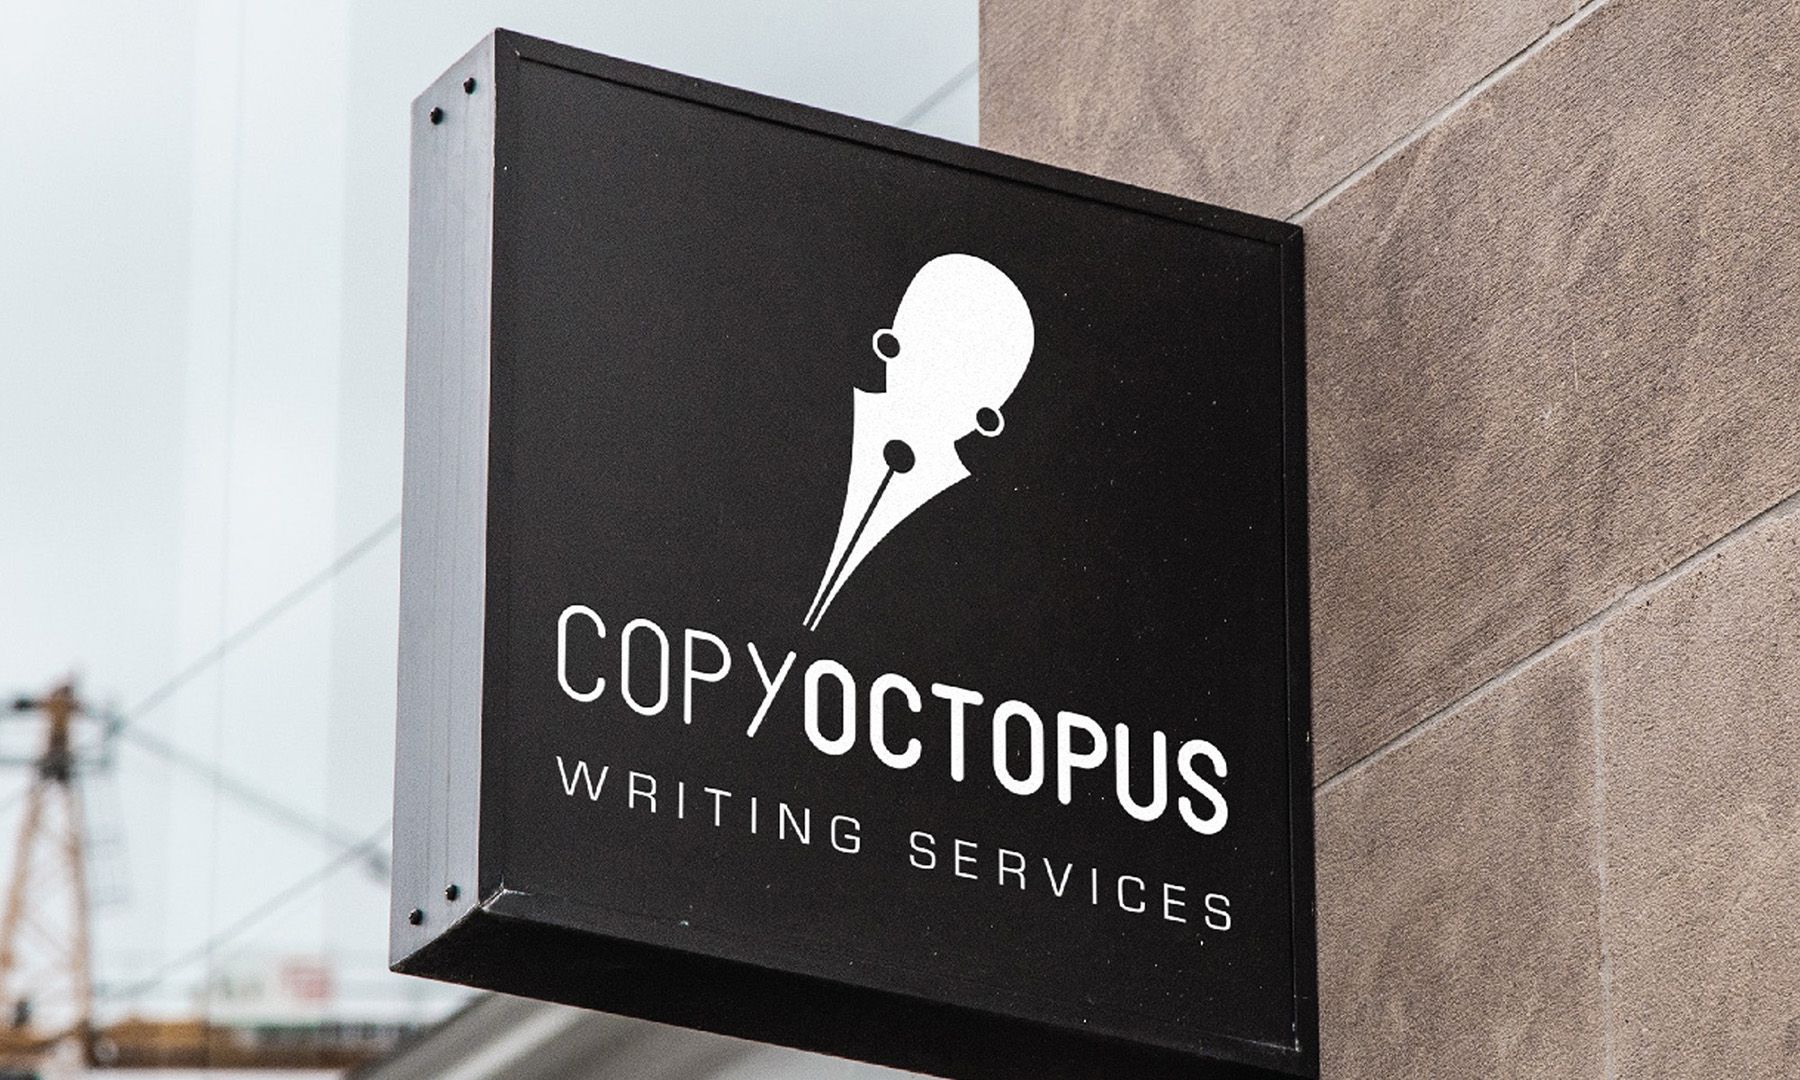 Copy Octopus wall sign